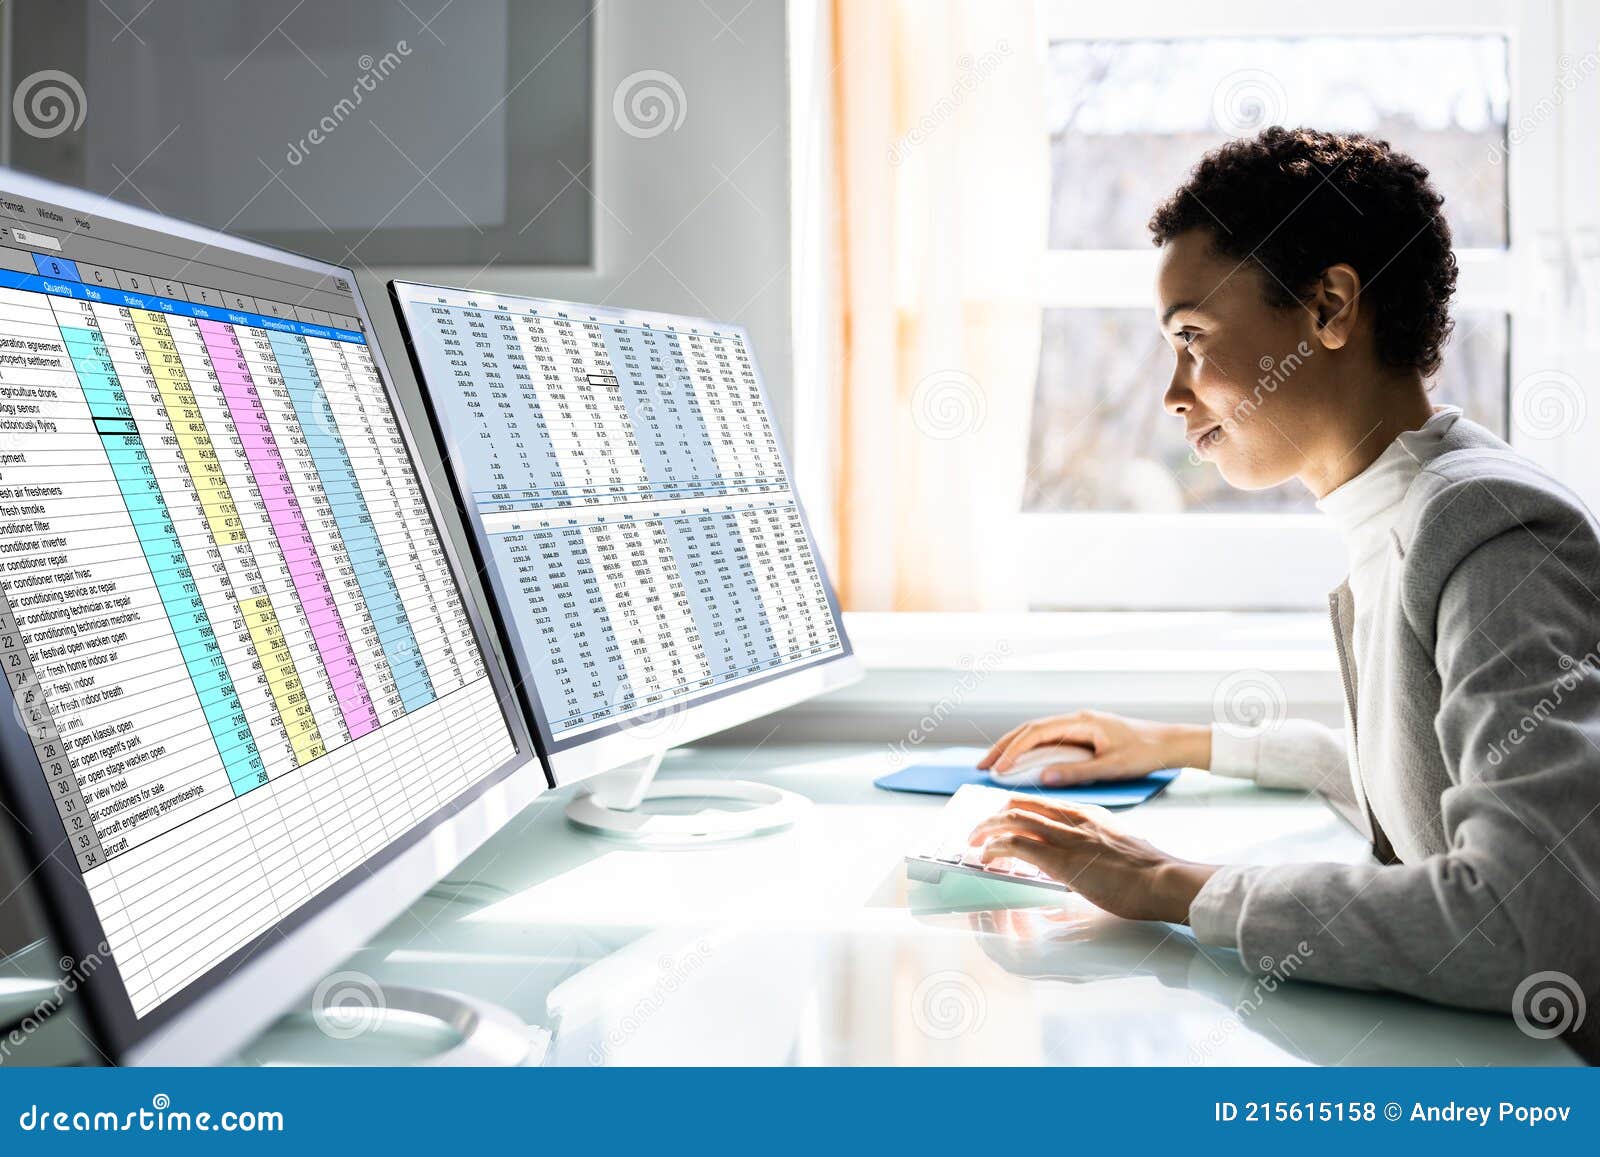 computer spreadsheet data analyst woman